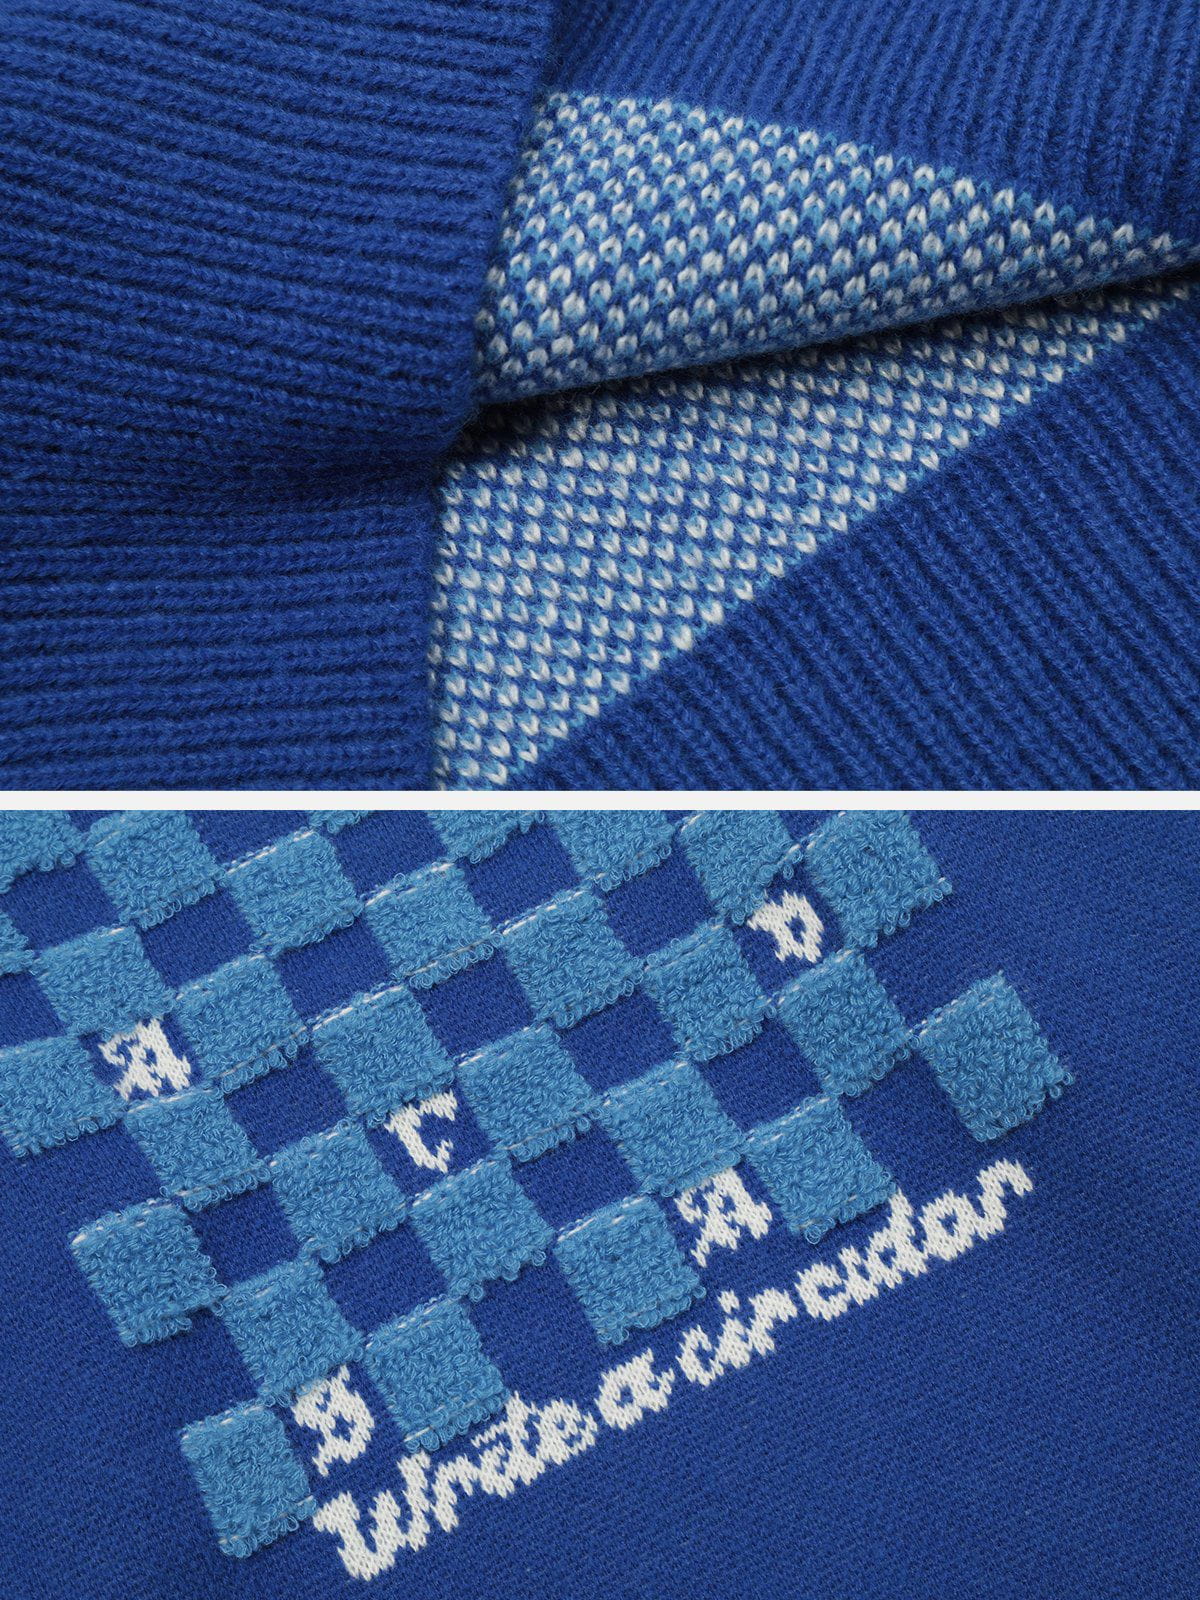 Majesda® - Plaid Towel Embroidery Sweater outfit ideas streetwear fashion